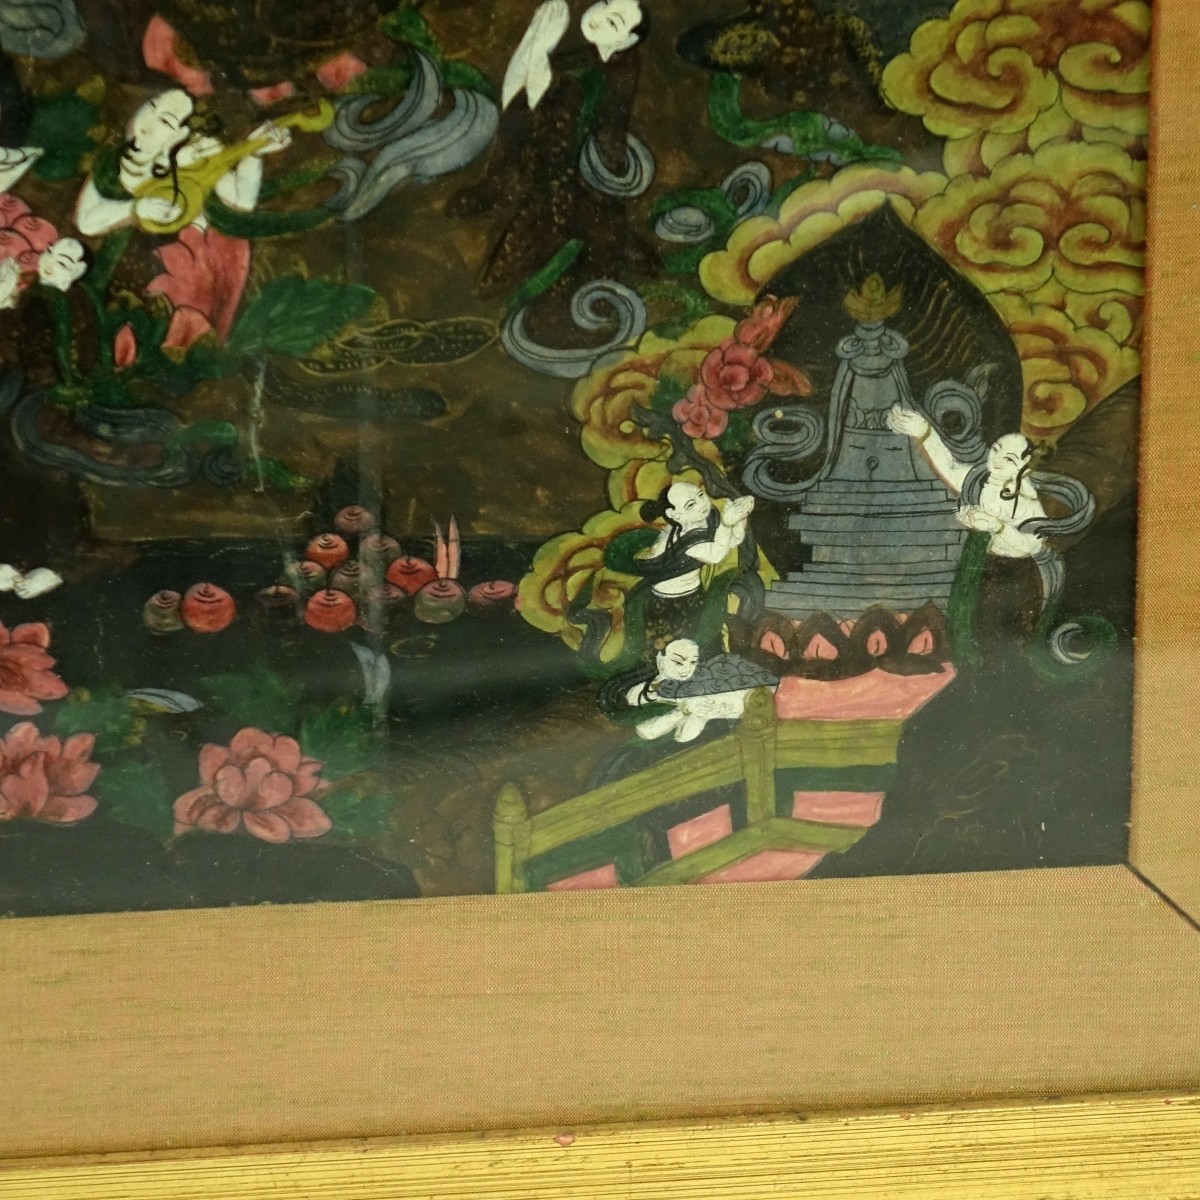 19/20th C. Tibetan Buddhist Painting